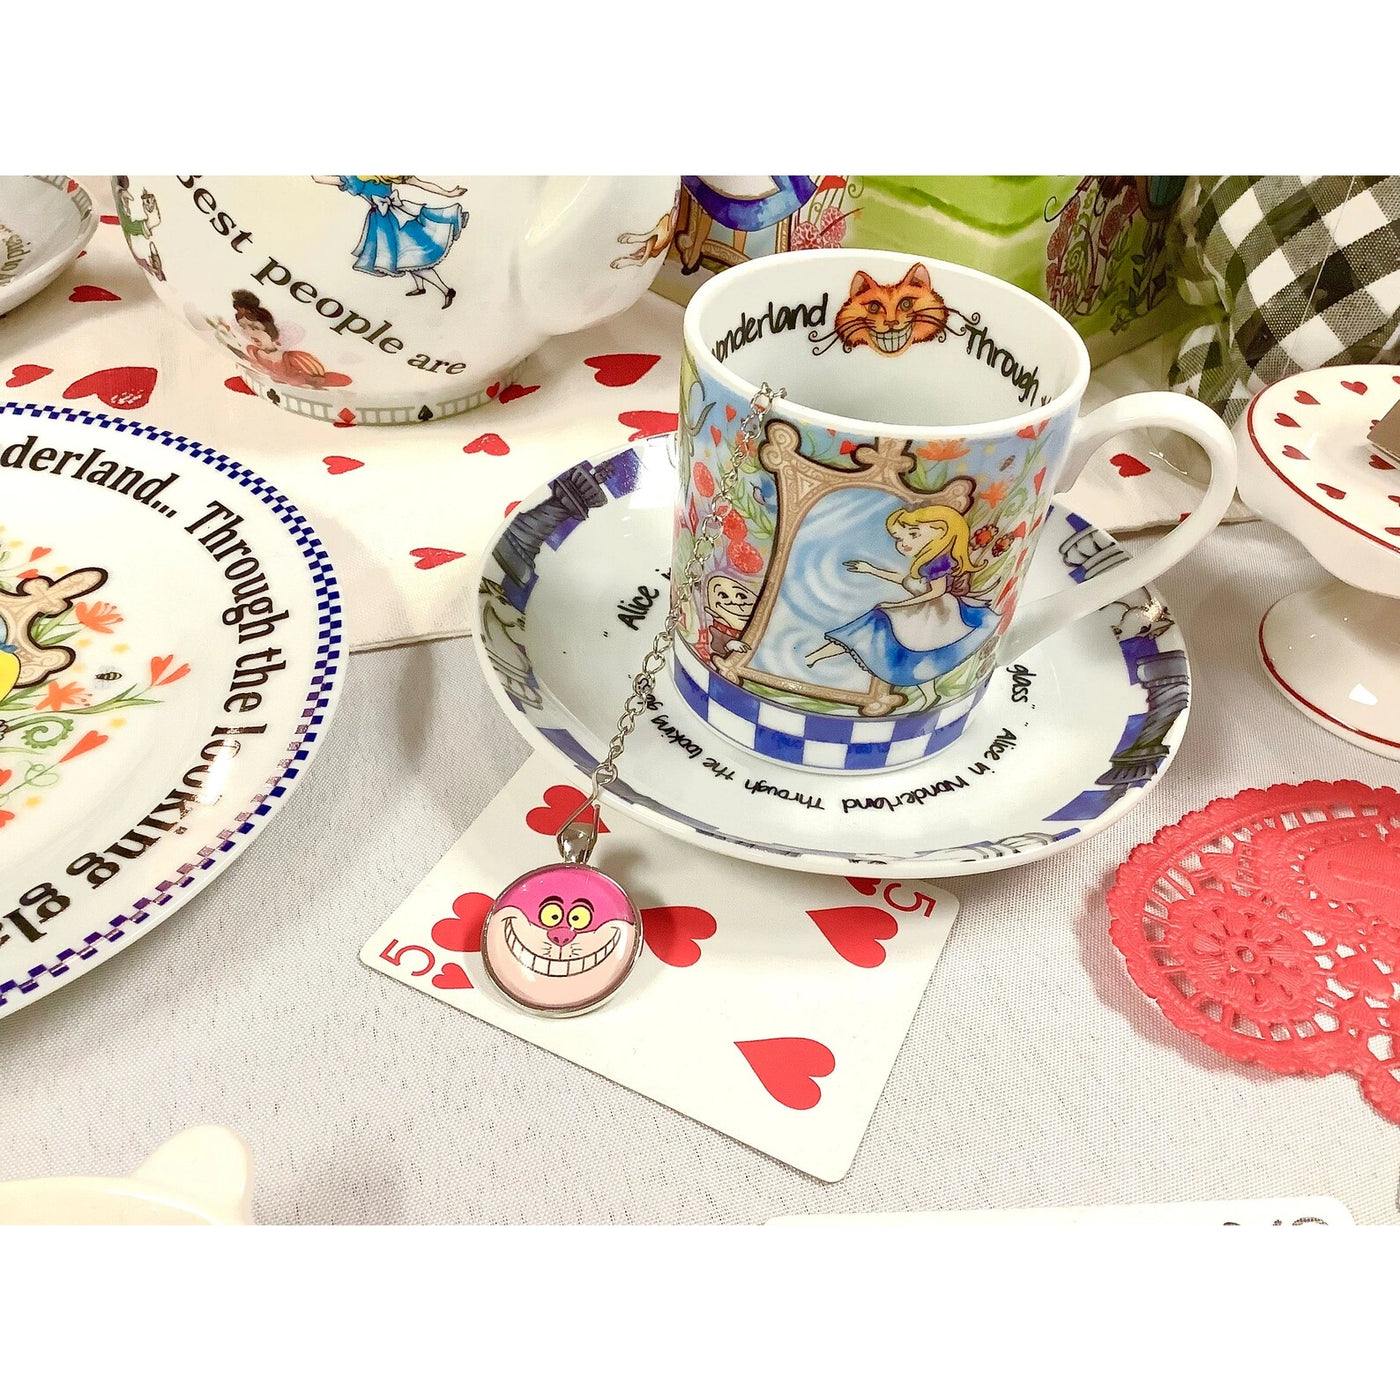 Alice in Wonderland - Hatter mug with plate